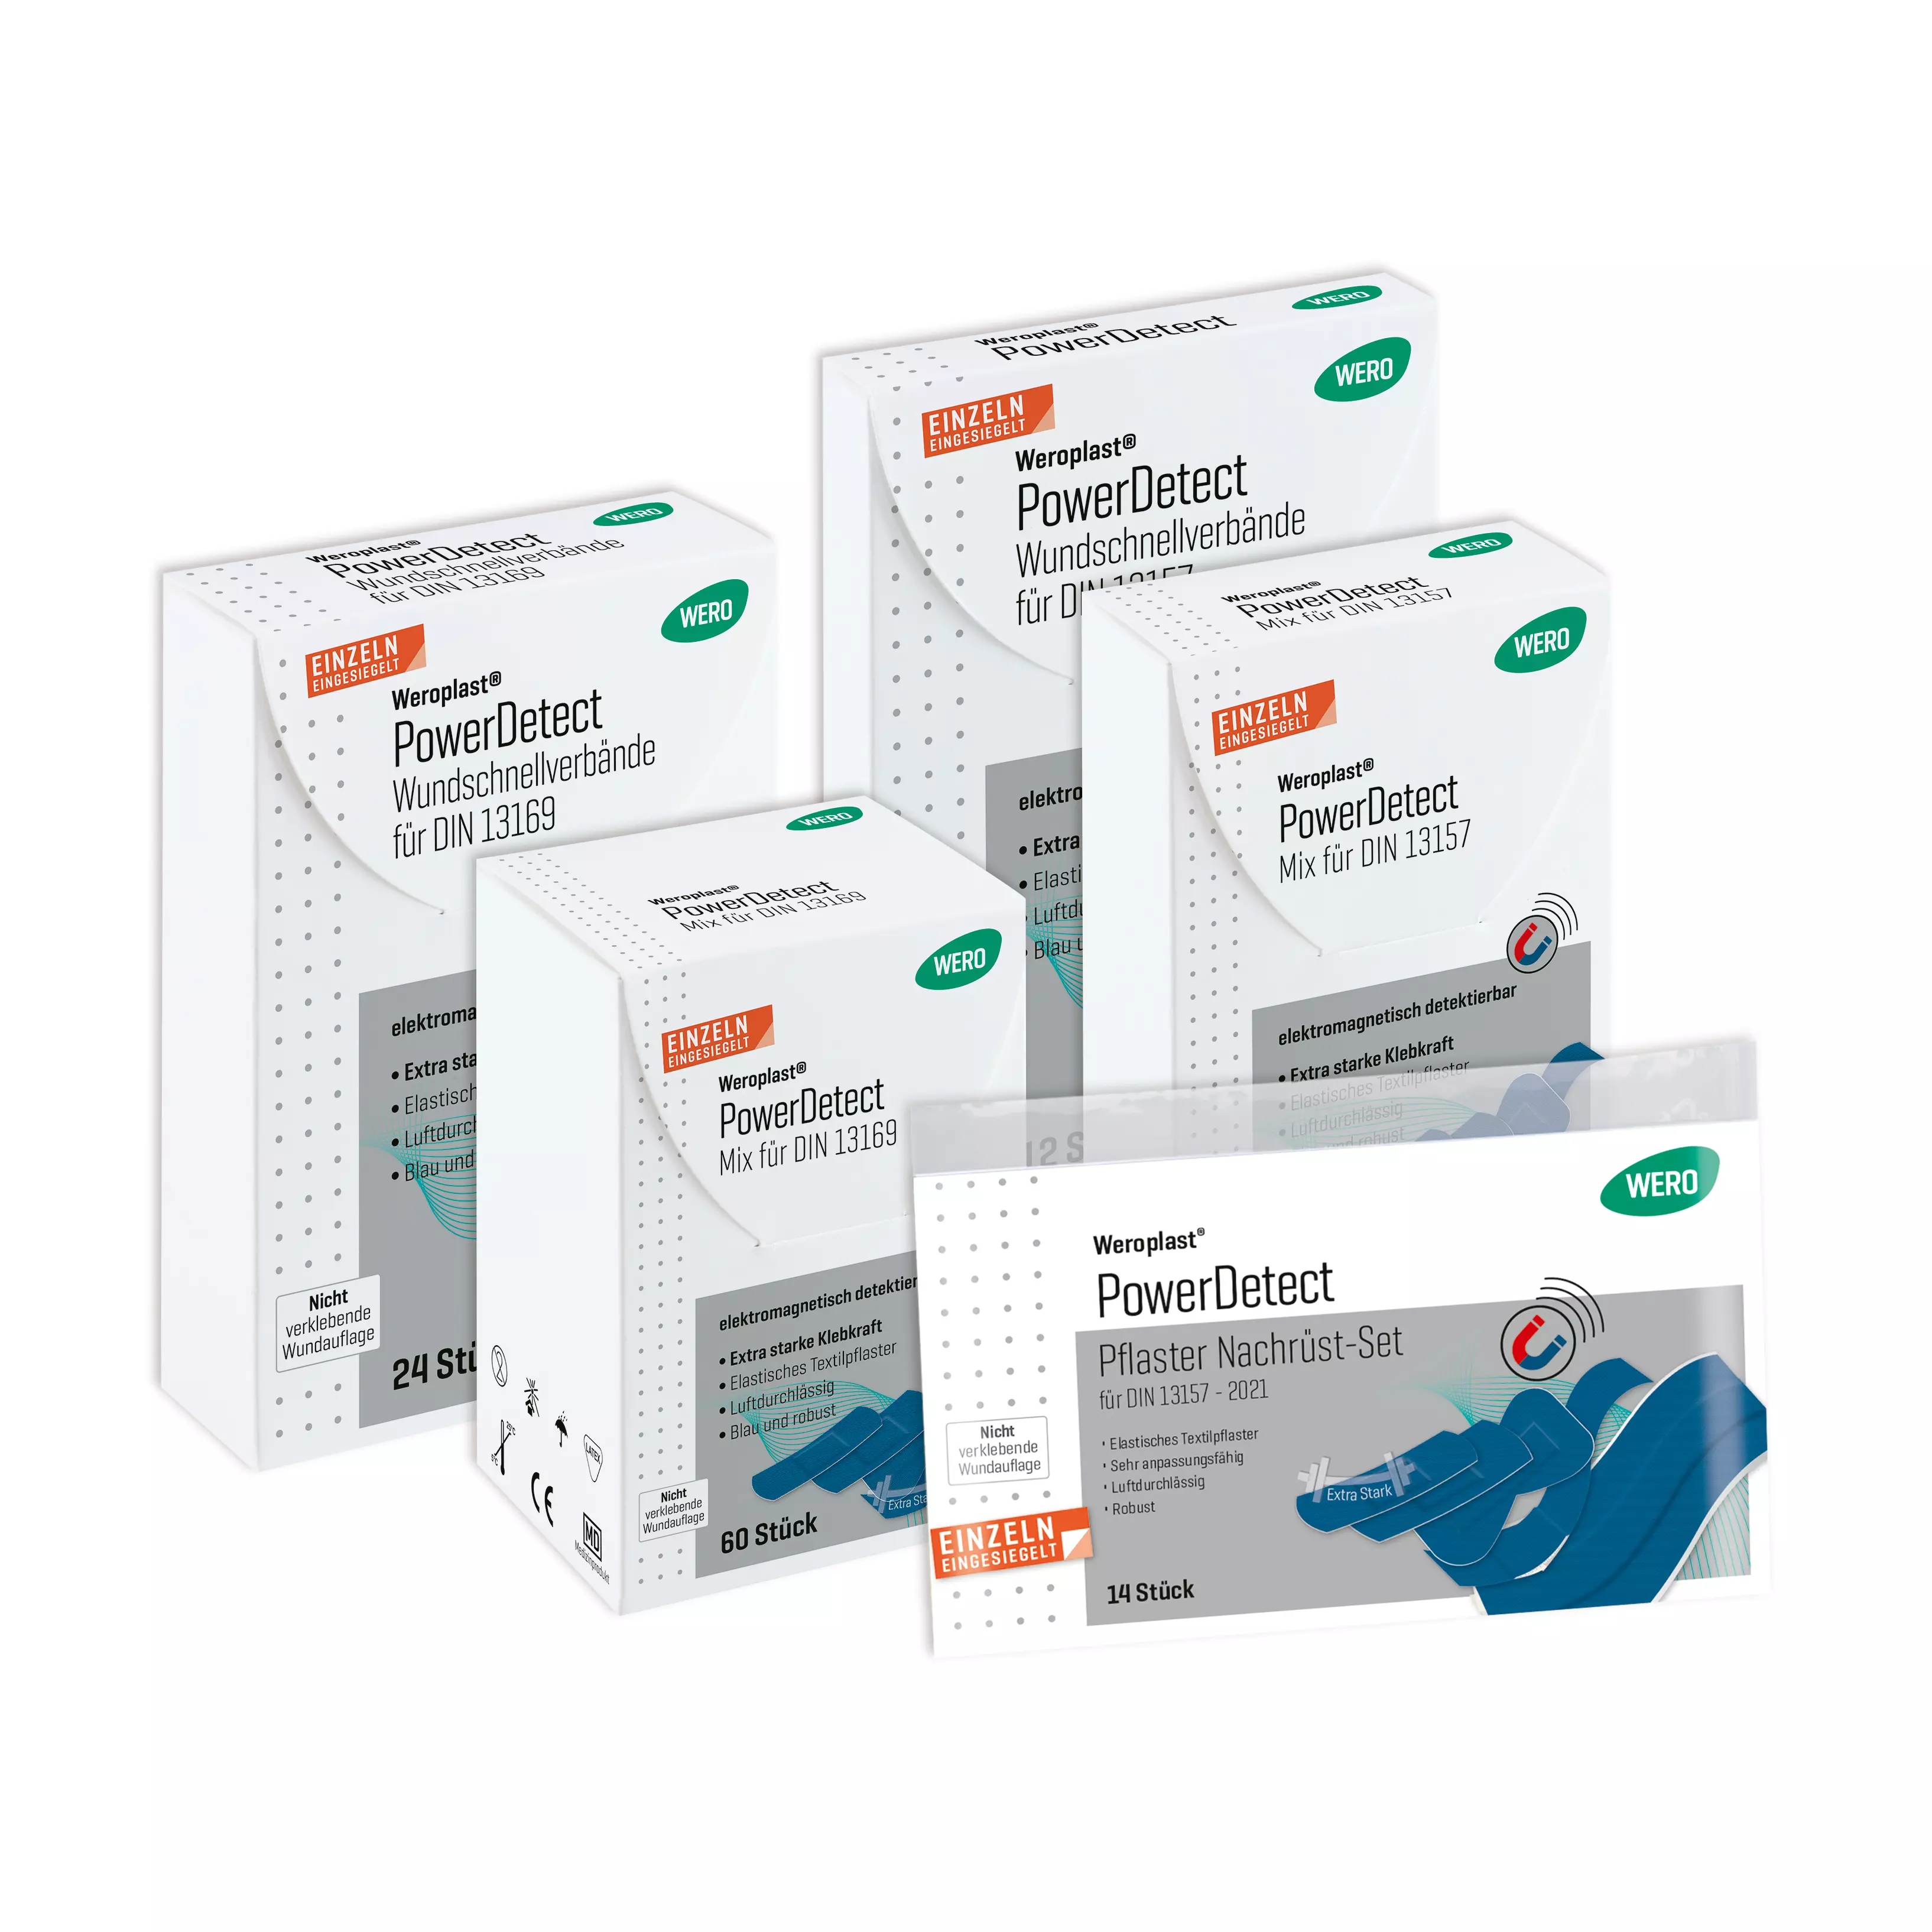 Pflasterset Weroplast® PowerDetect - Mix DIN 13169